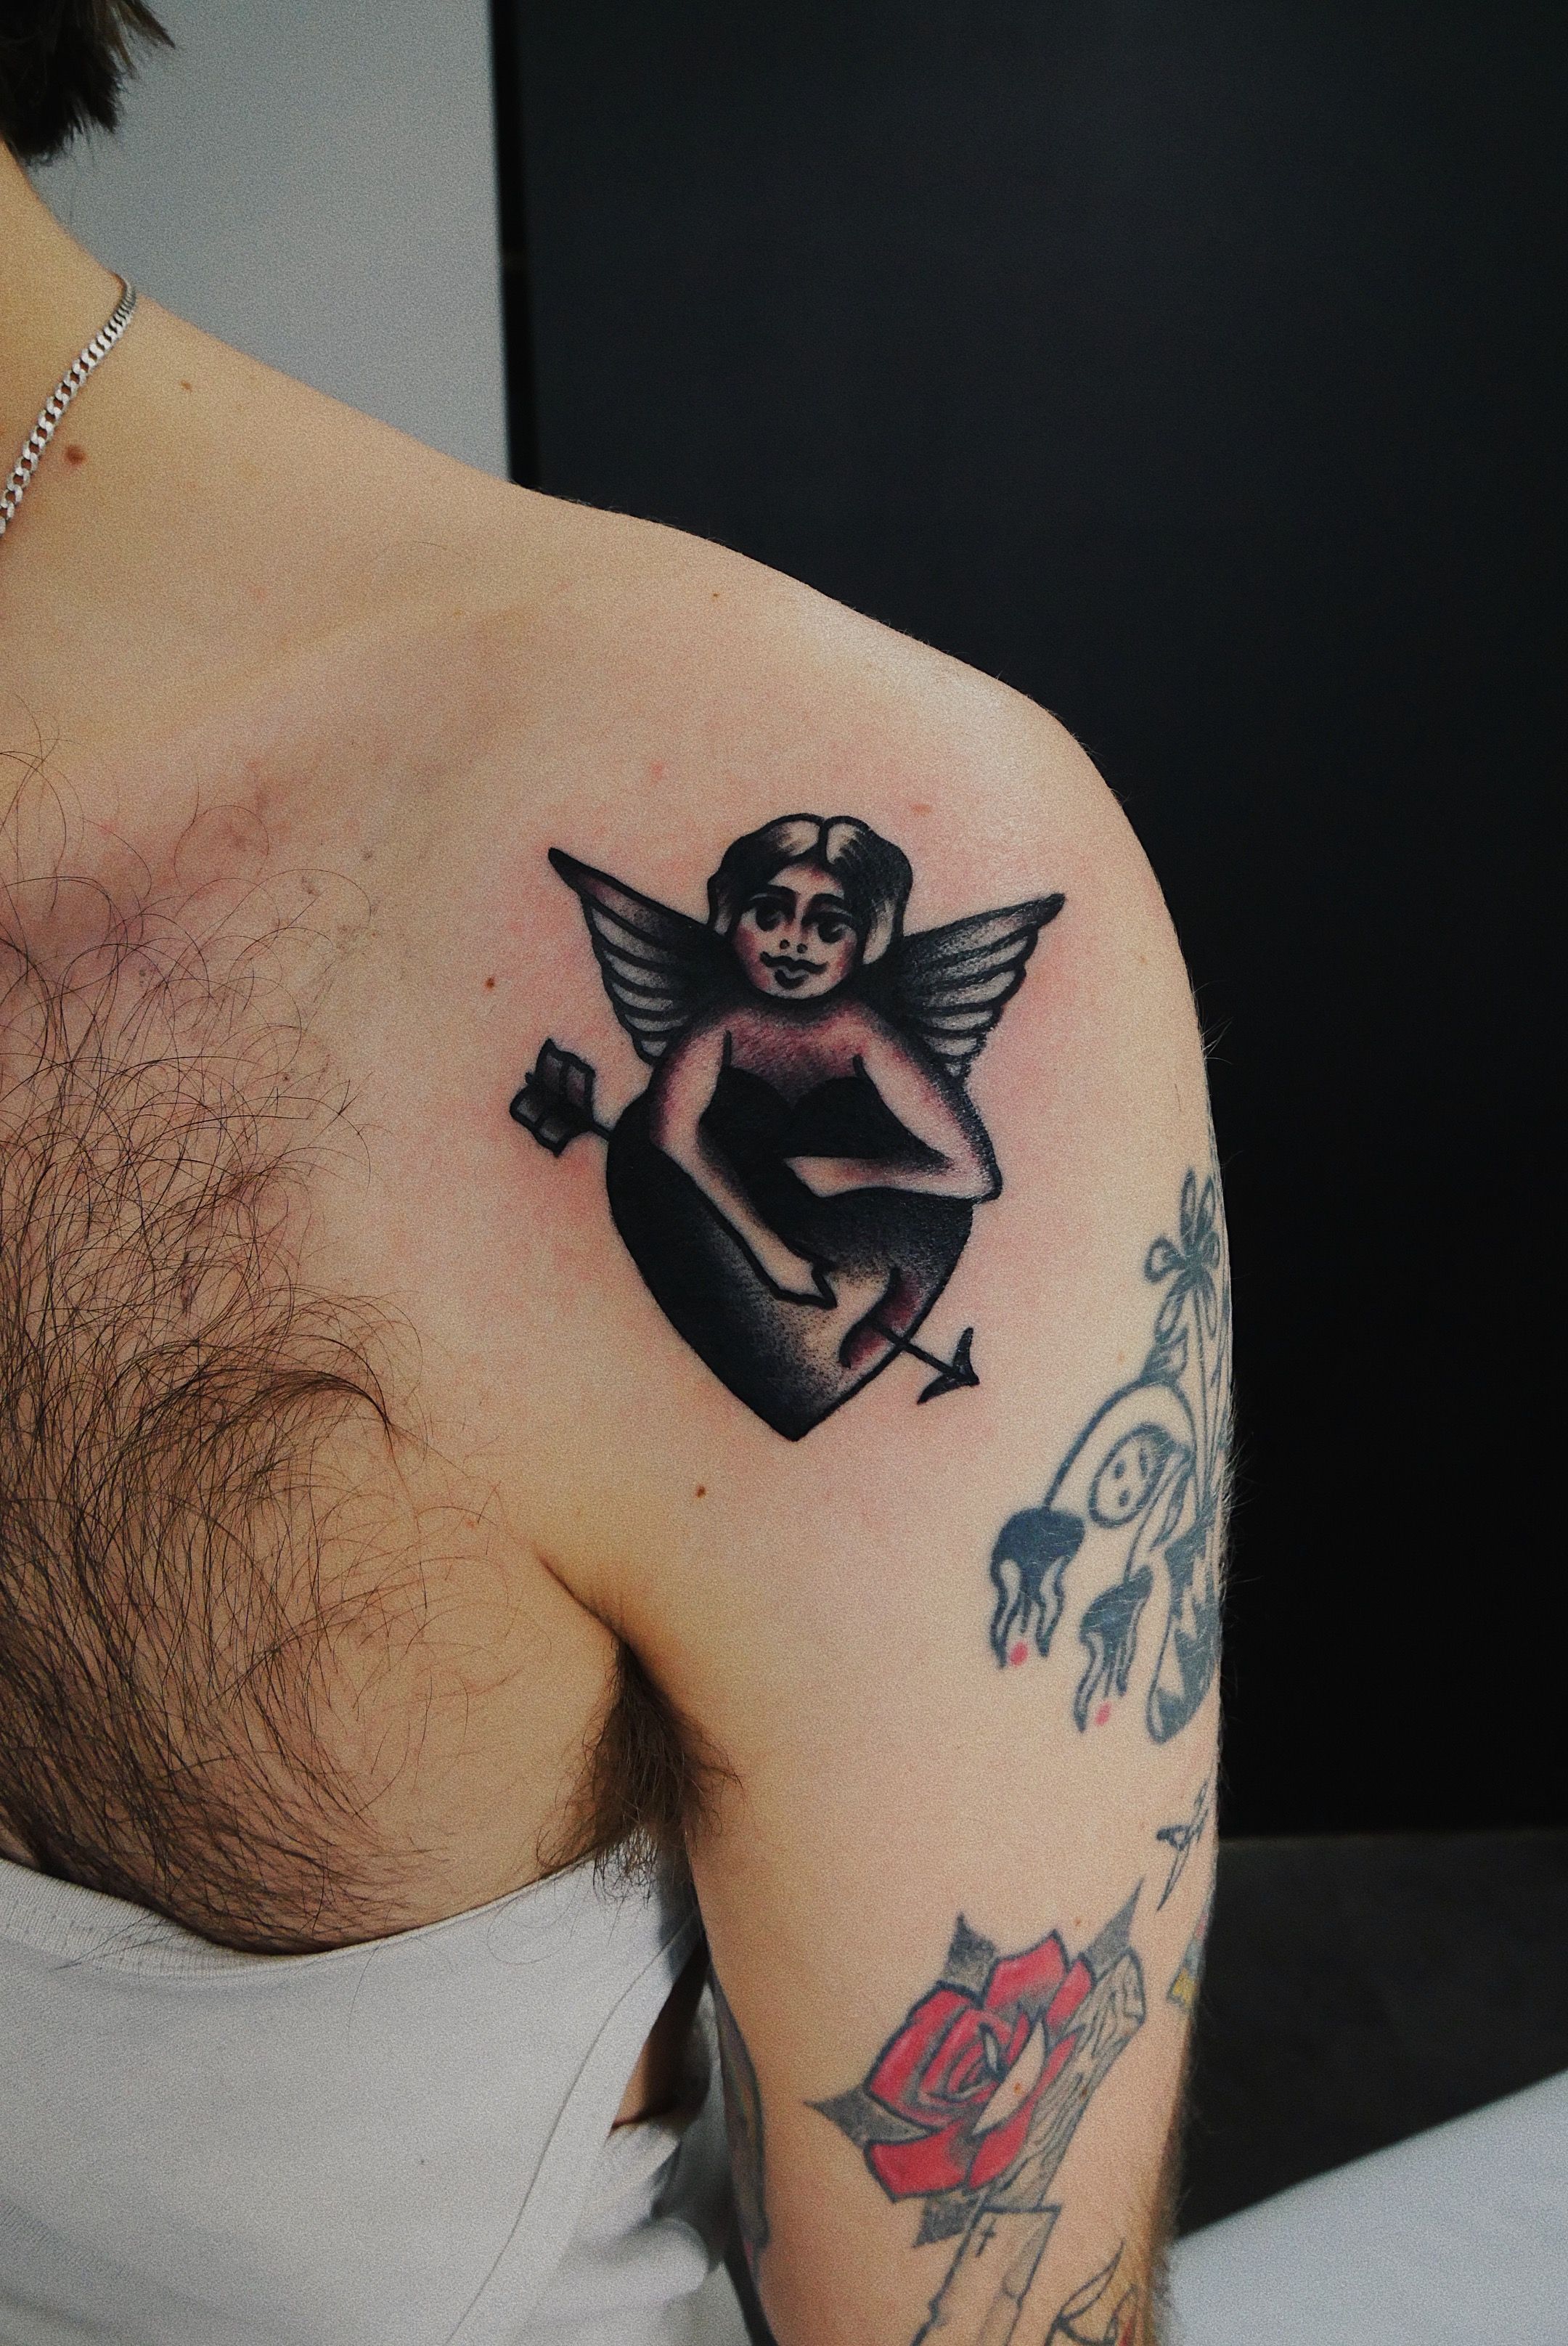 Cupid by Khalil Linane | Cupid tattoo Khalil Linane @ Under … | Flickr